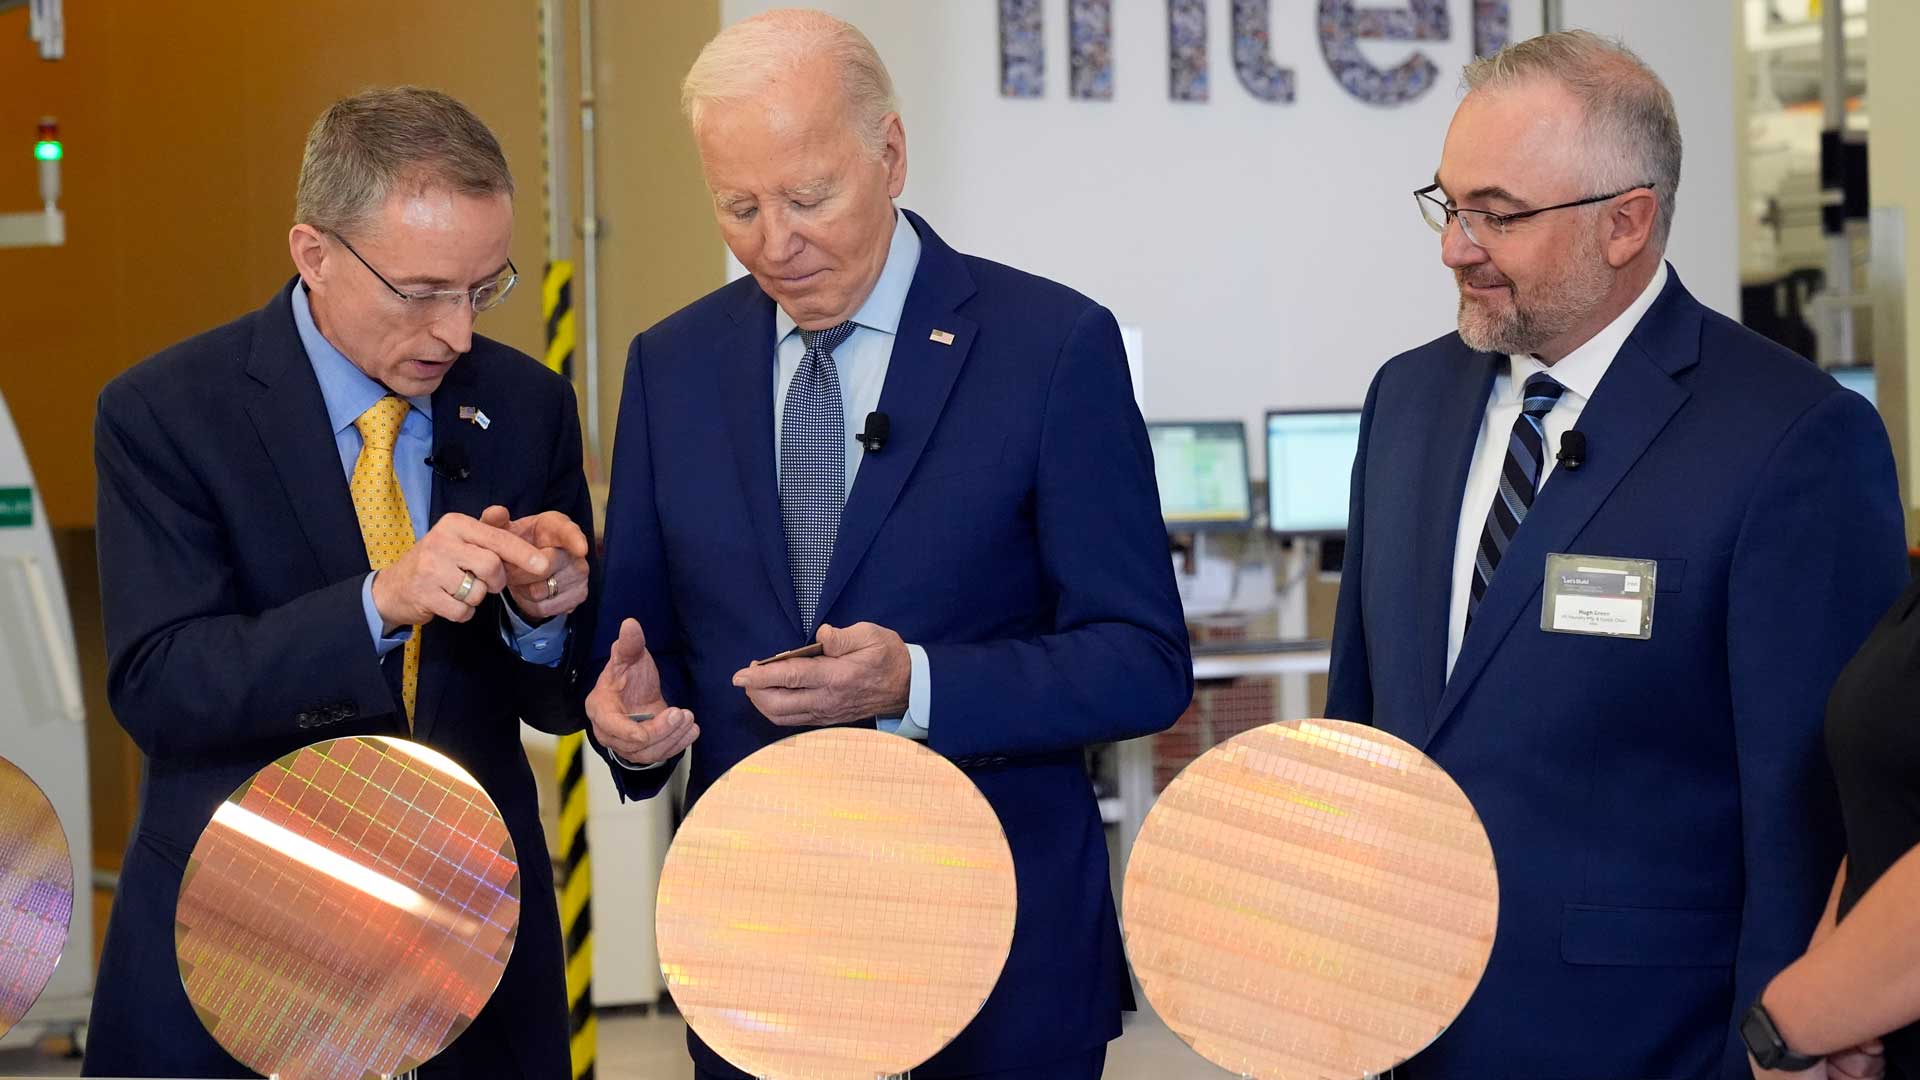 Biden touts Arizona as America's 'future' as government invests $8.5 billion in chipmaker Intel 